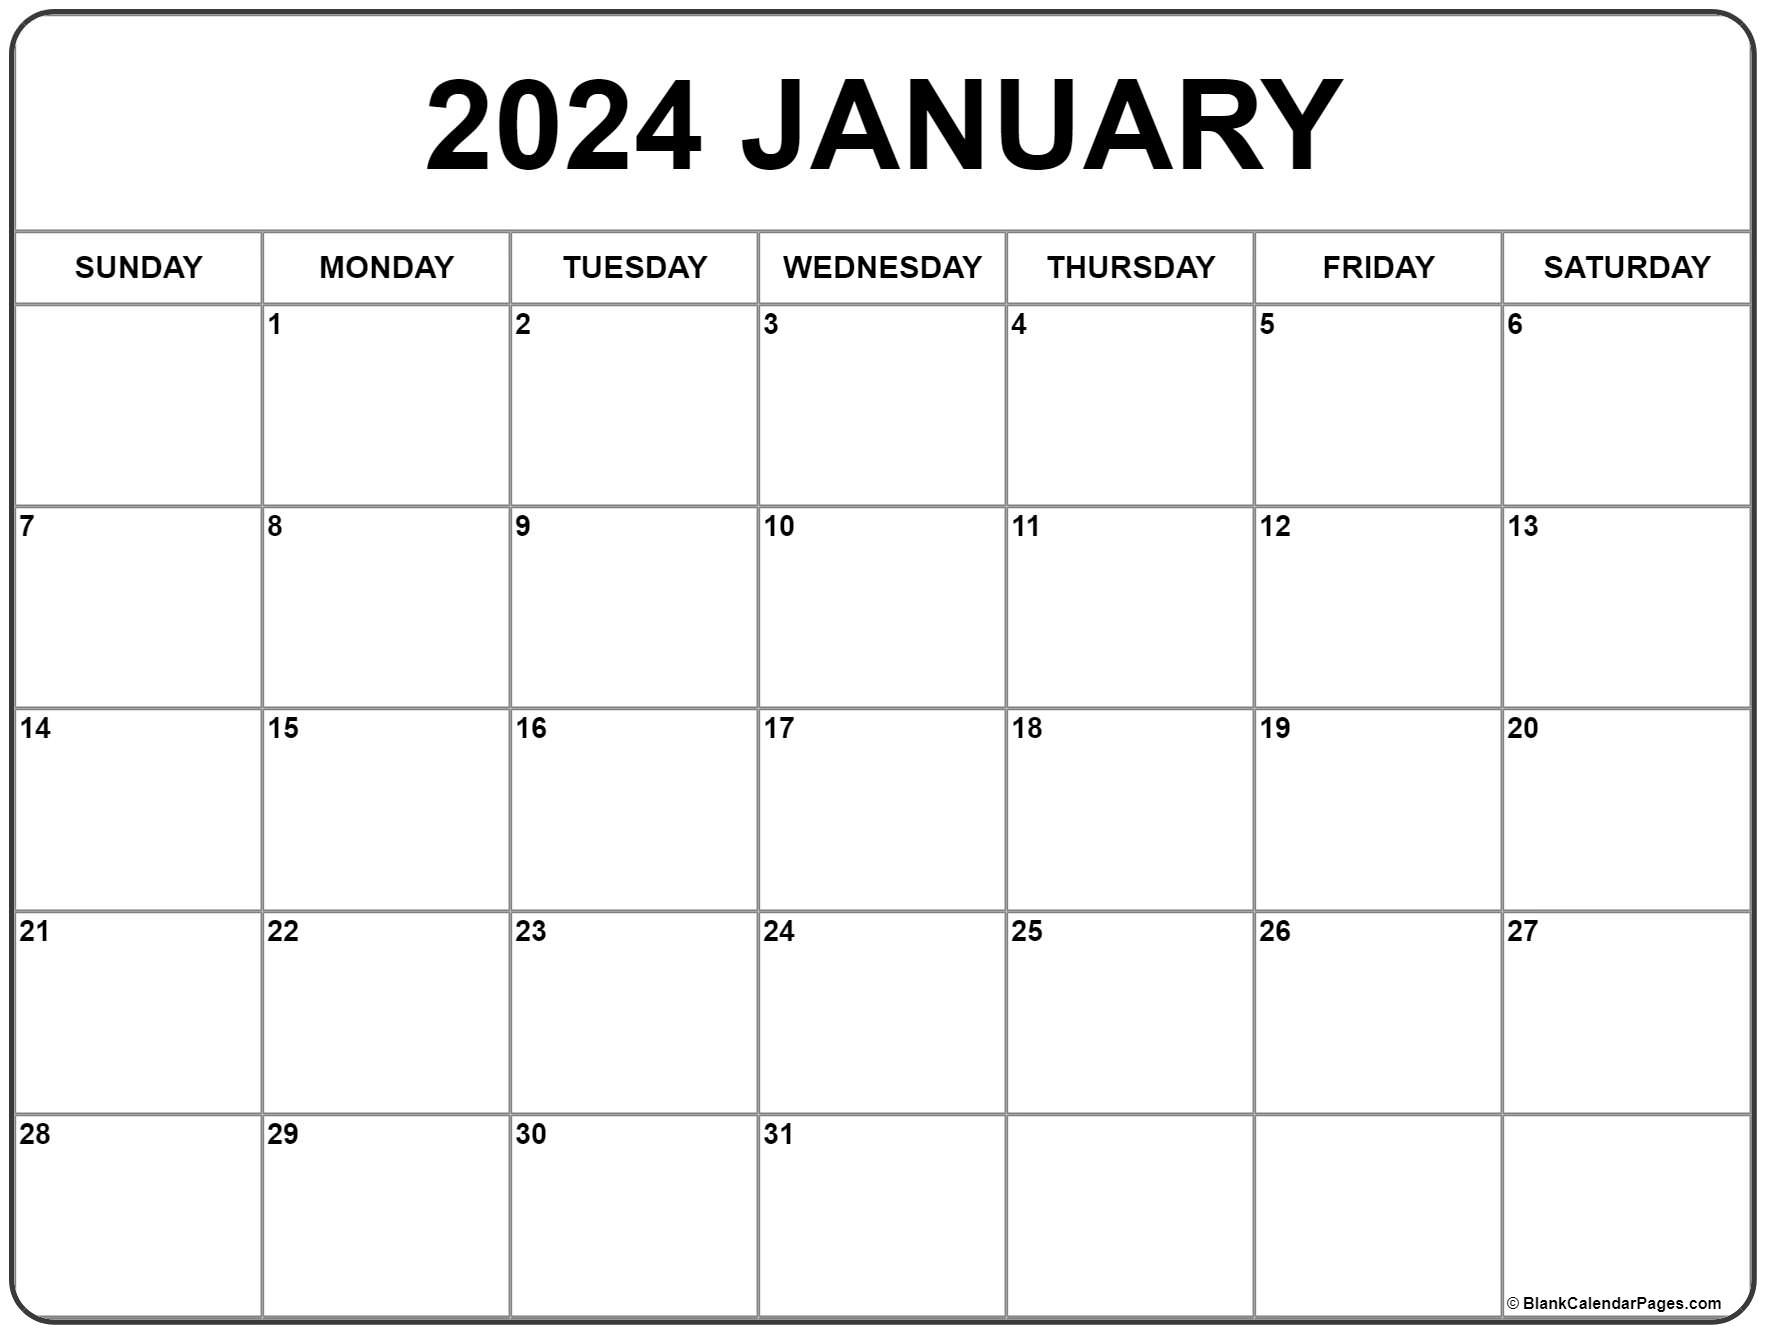 January 2024 Calendar | Free Printable Calendar for Free January 2024 Printable Calendar